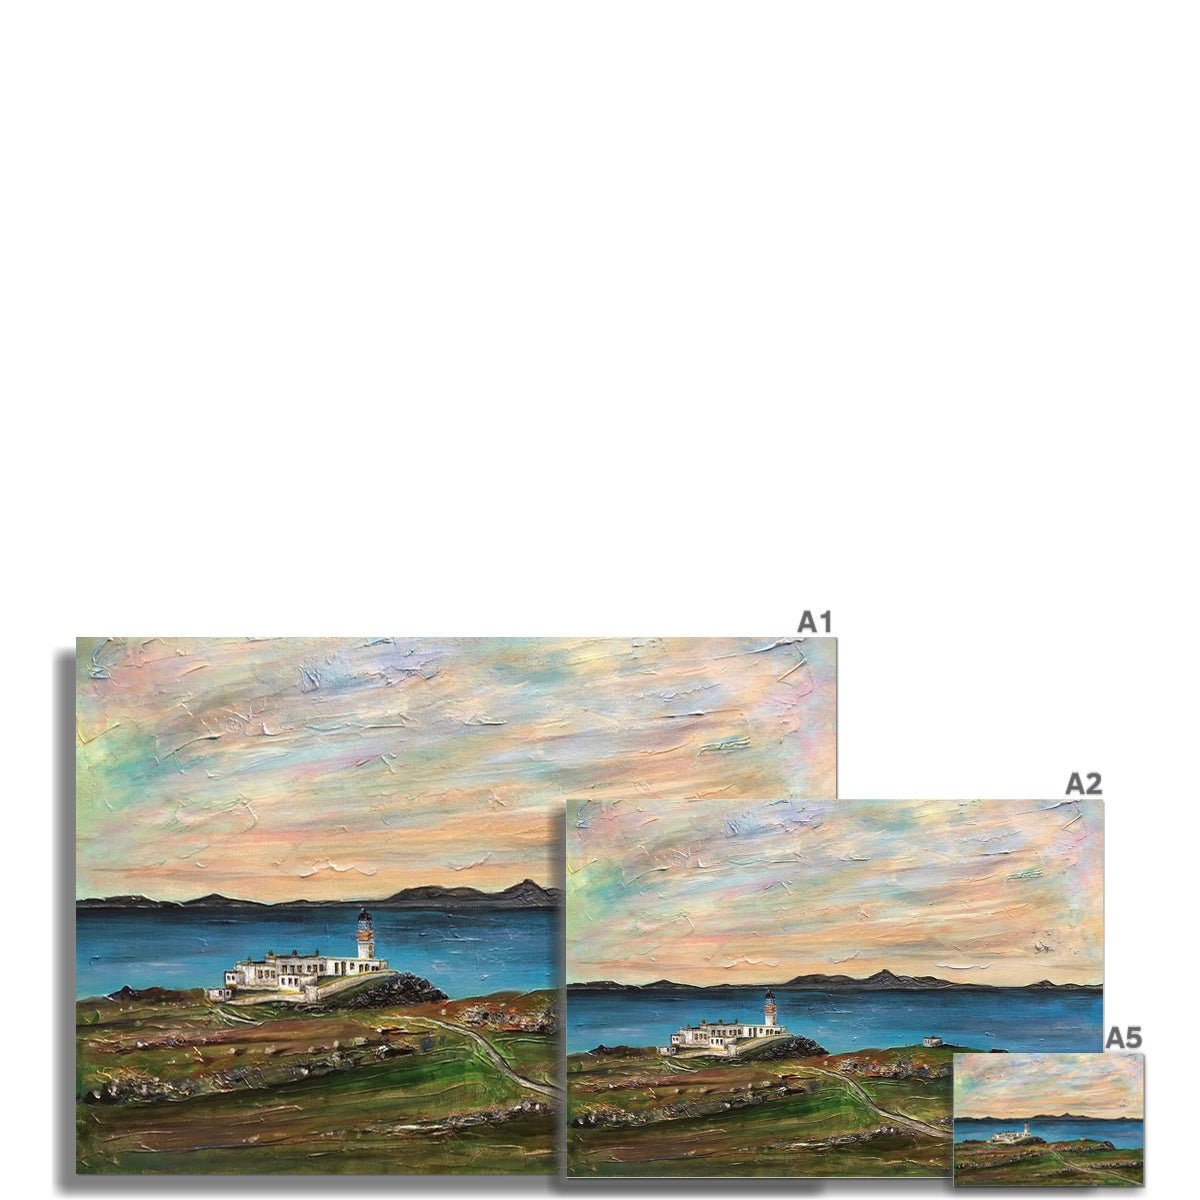 Neist Point Skye Painting | Fine Art Prints From Scotland-Unframed Prints-Skye Art Gallery-Paintings, Prints, Homeware, Art Gifts From Scotland By Scottish Artist Kevin Hunter